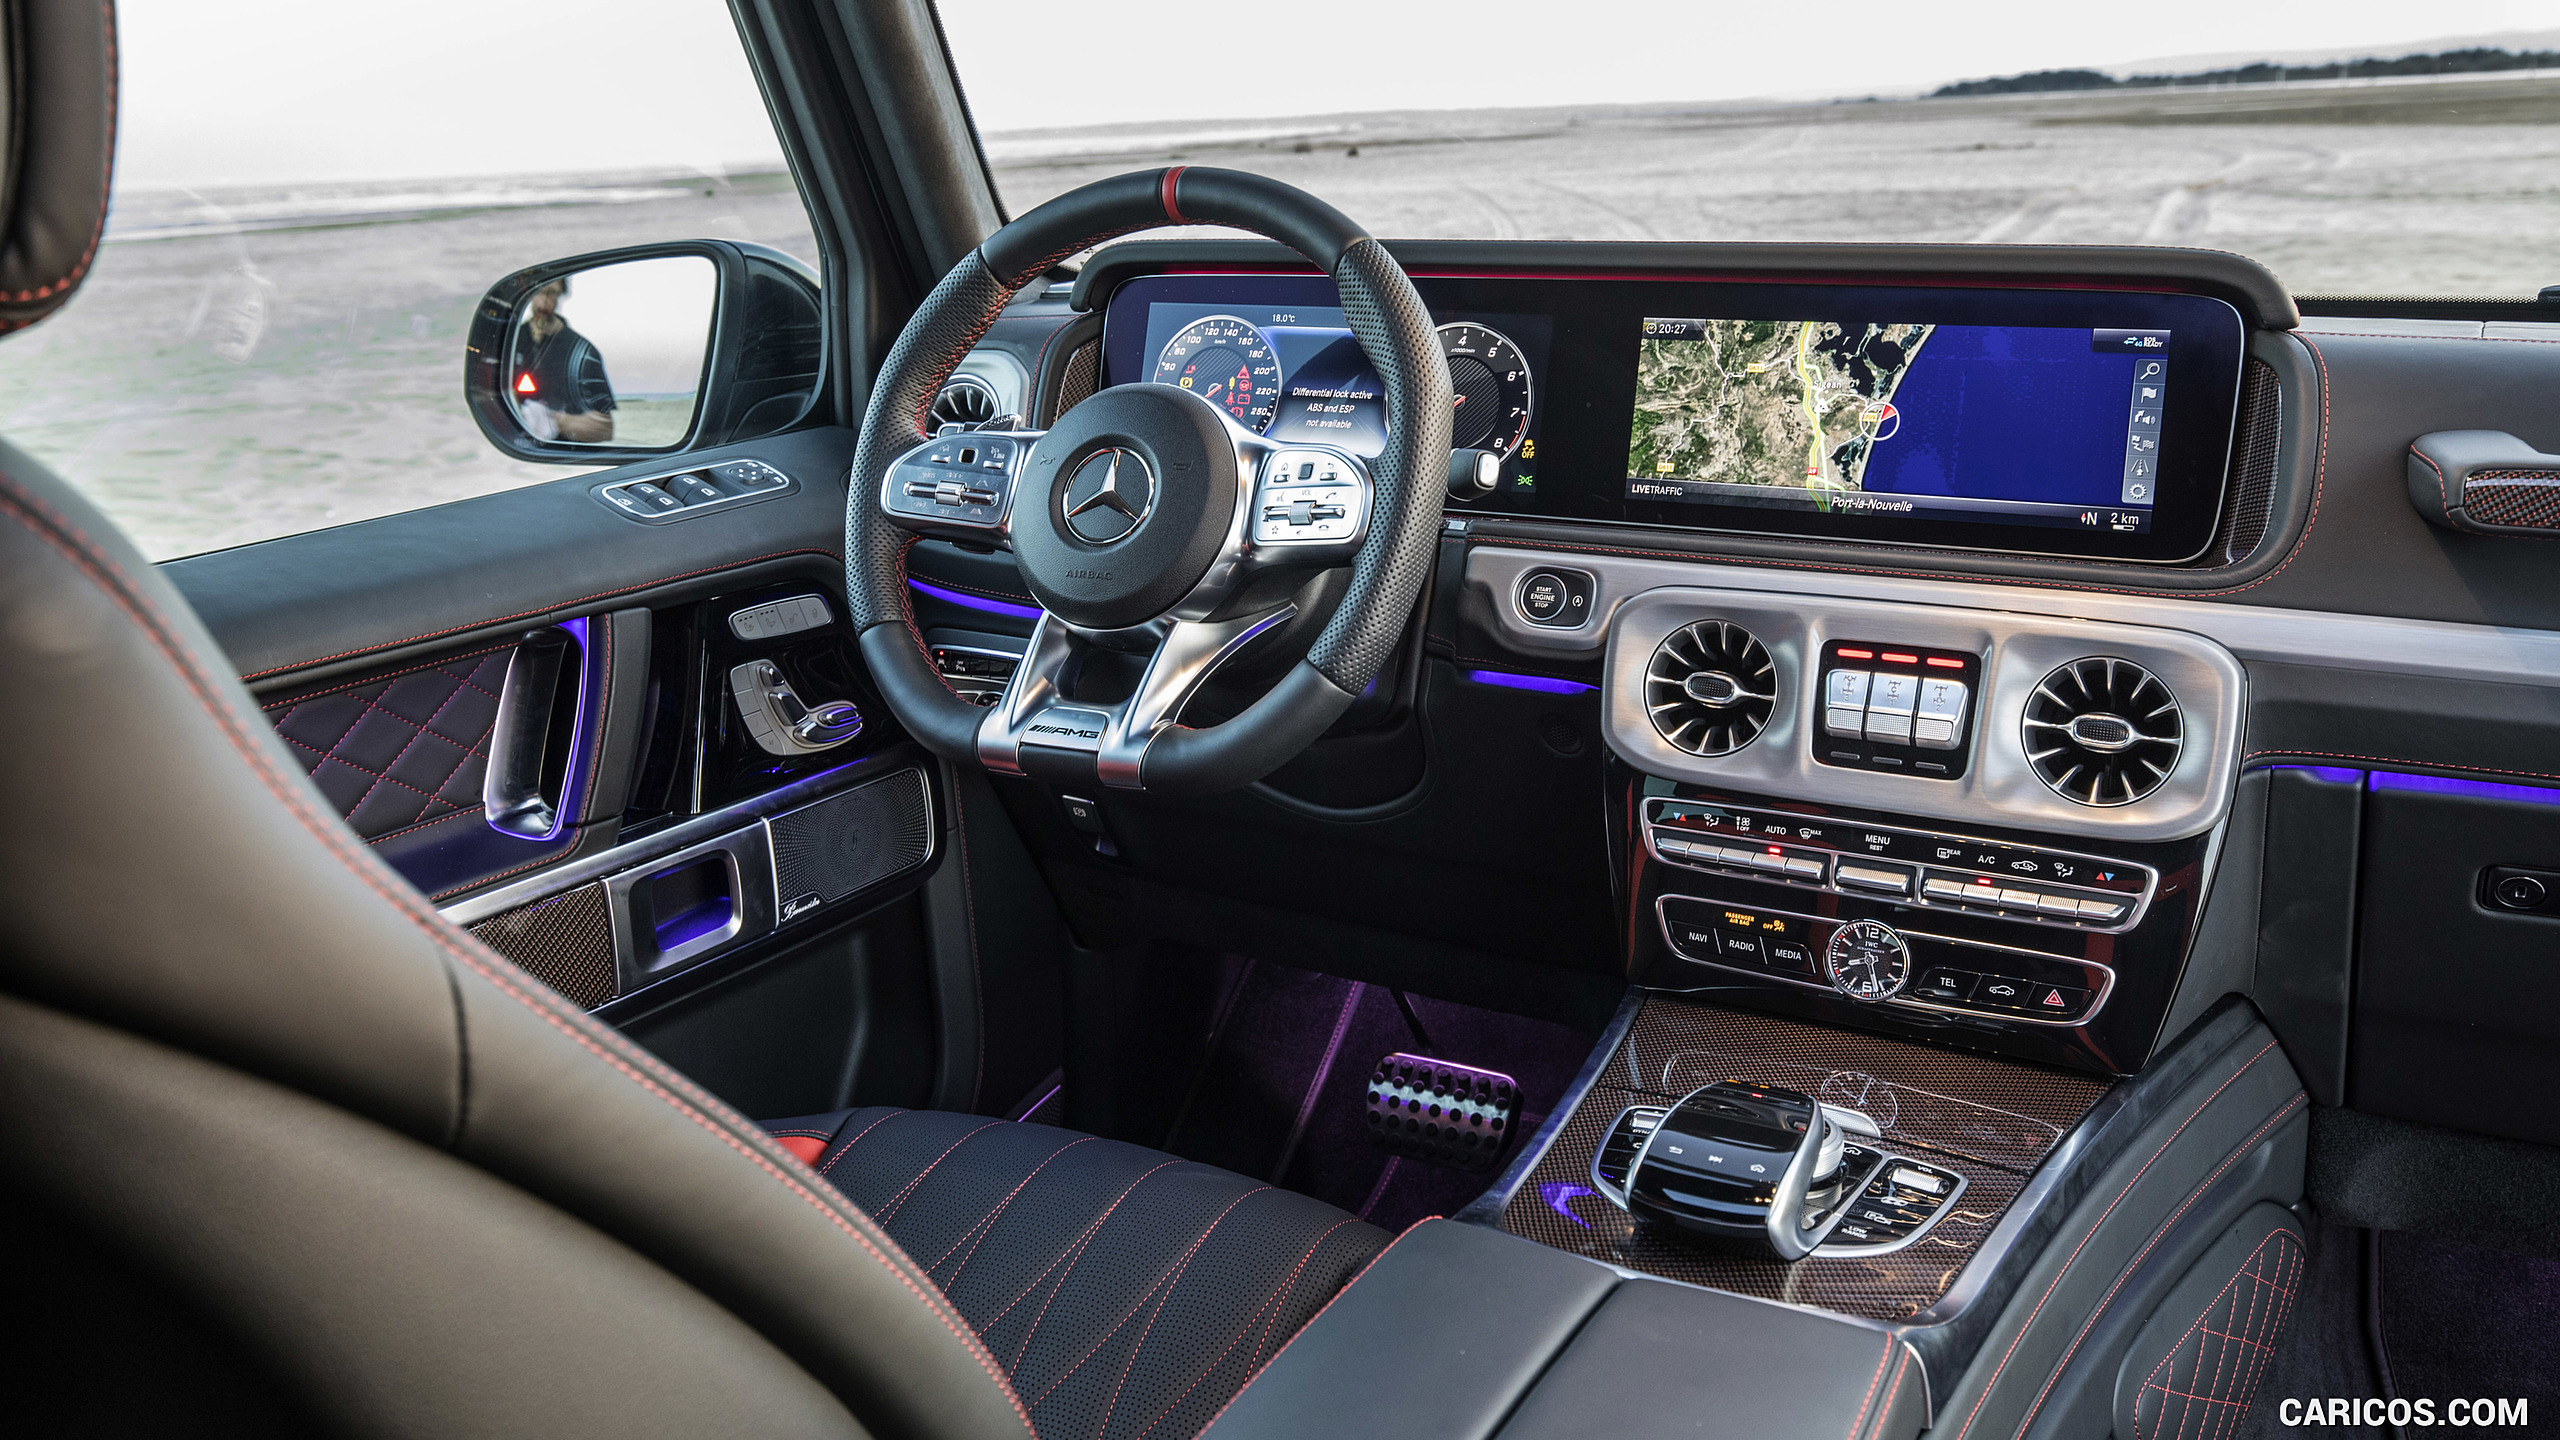 2019 Mercedes Amg G63 Interior Caricos